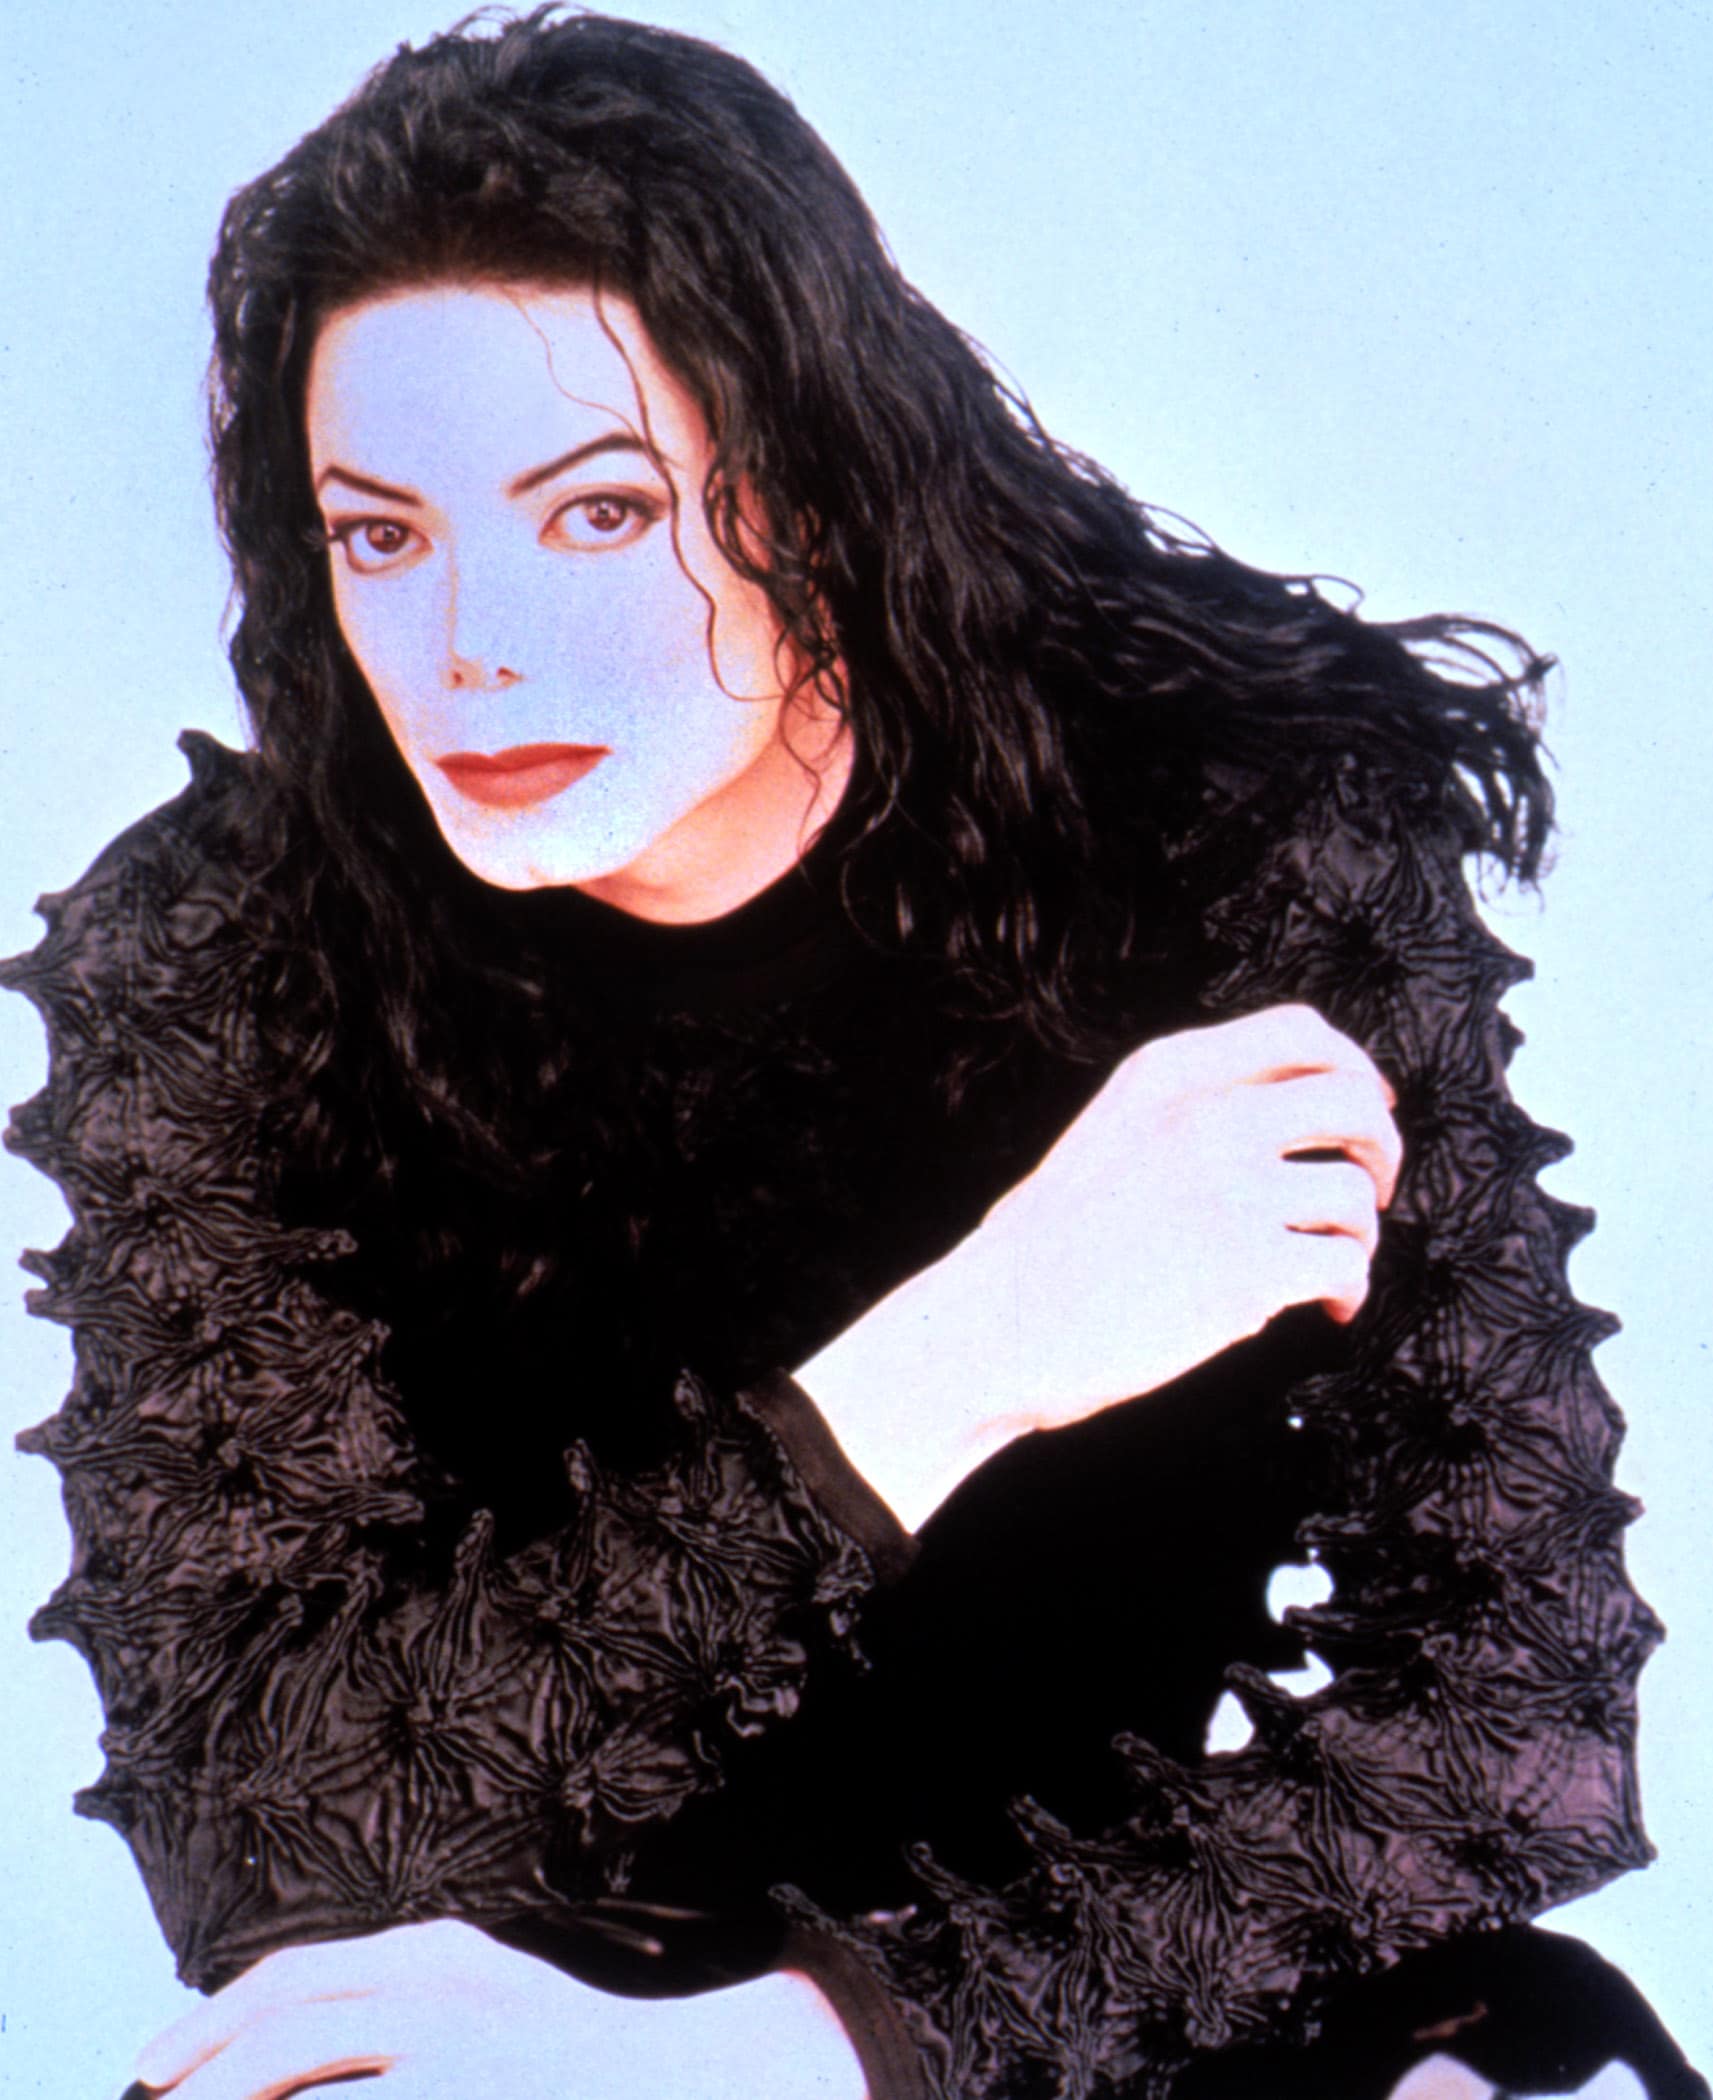 Michael Jackson, mid-'90s